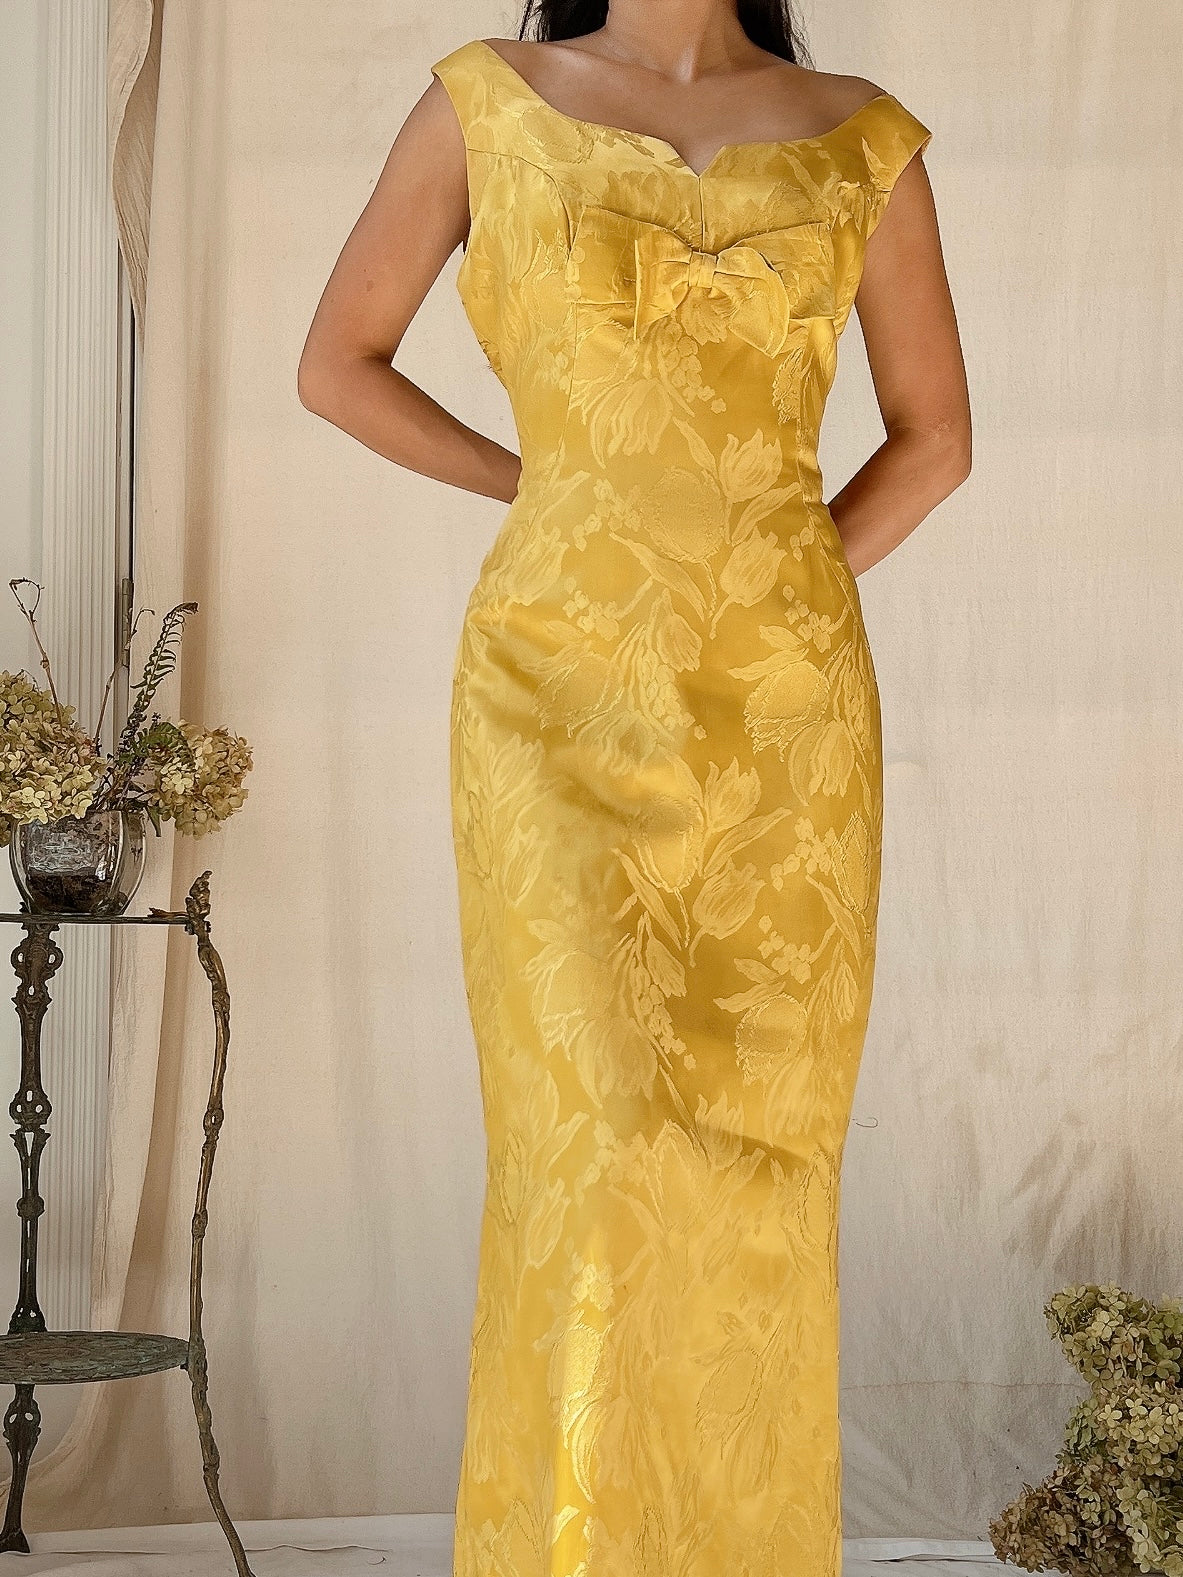 1960s Marigold Brocade Dress - S